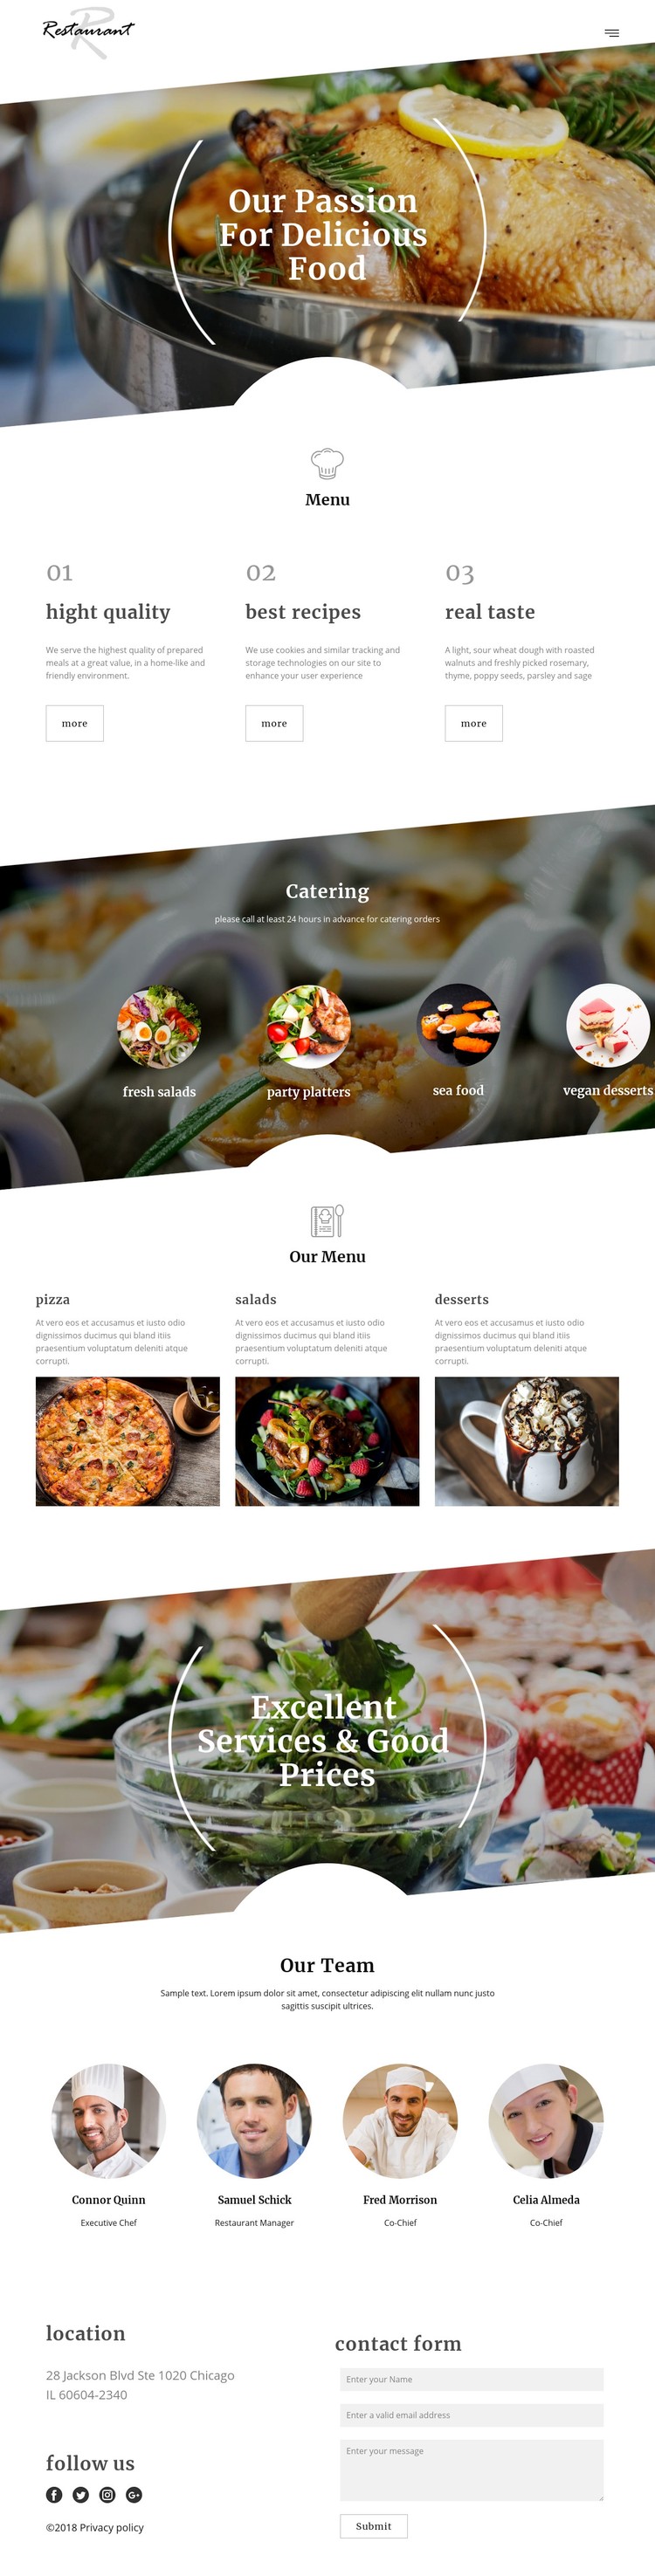 Executive chef recipes Webflow Template Alternative